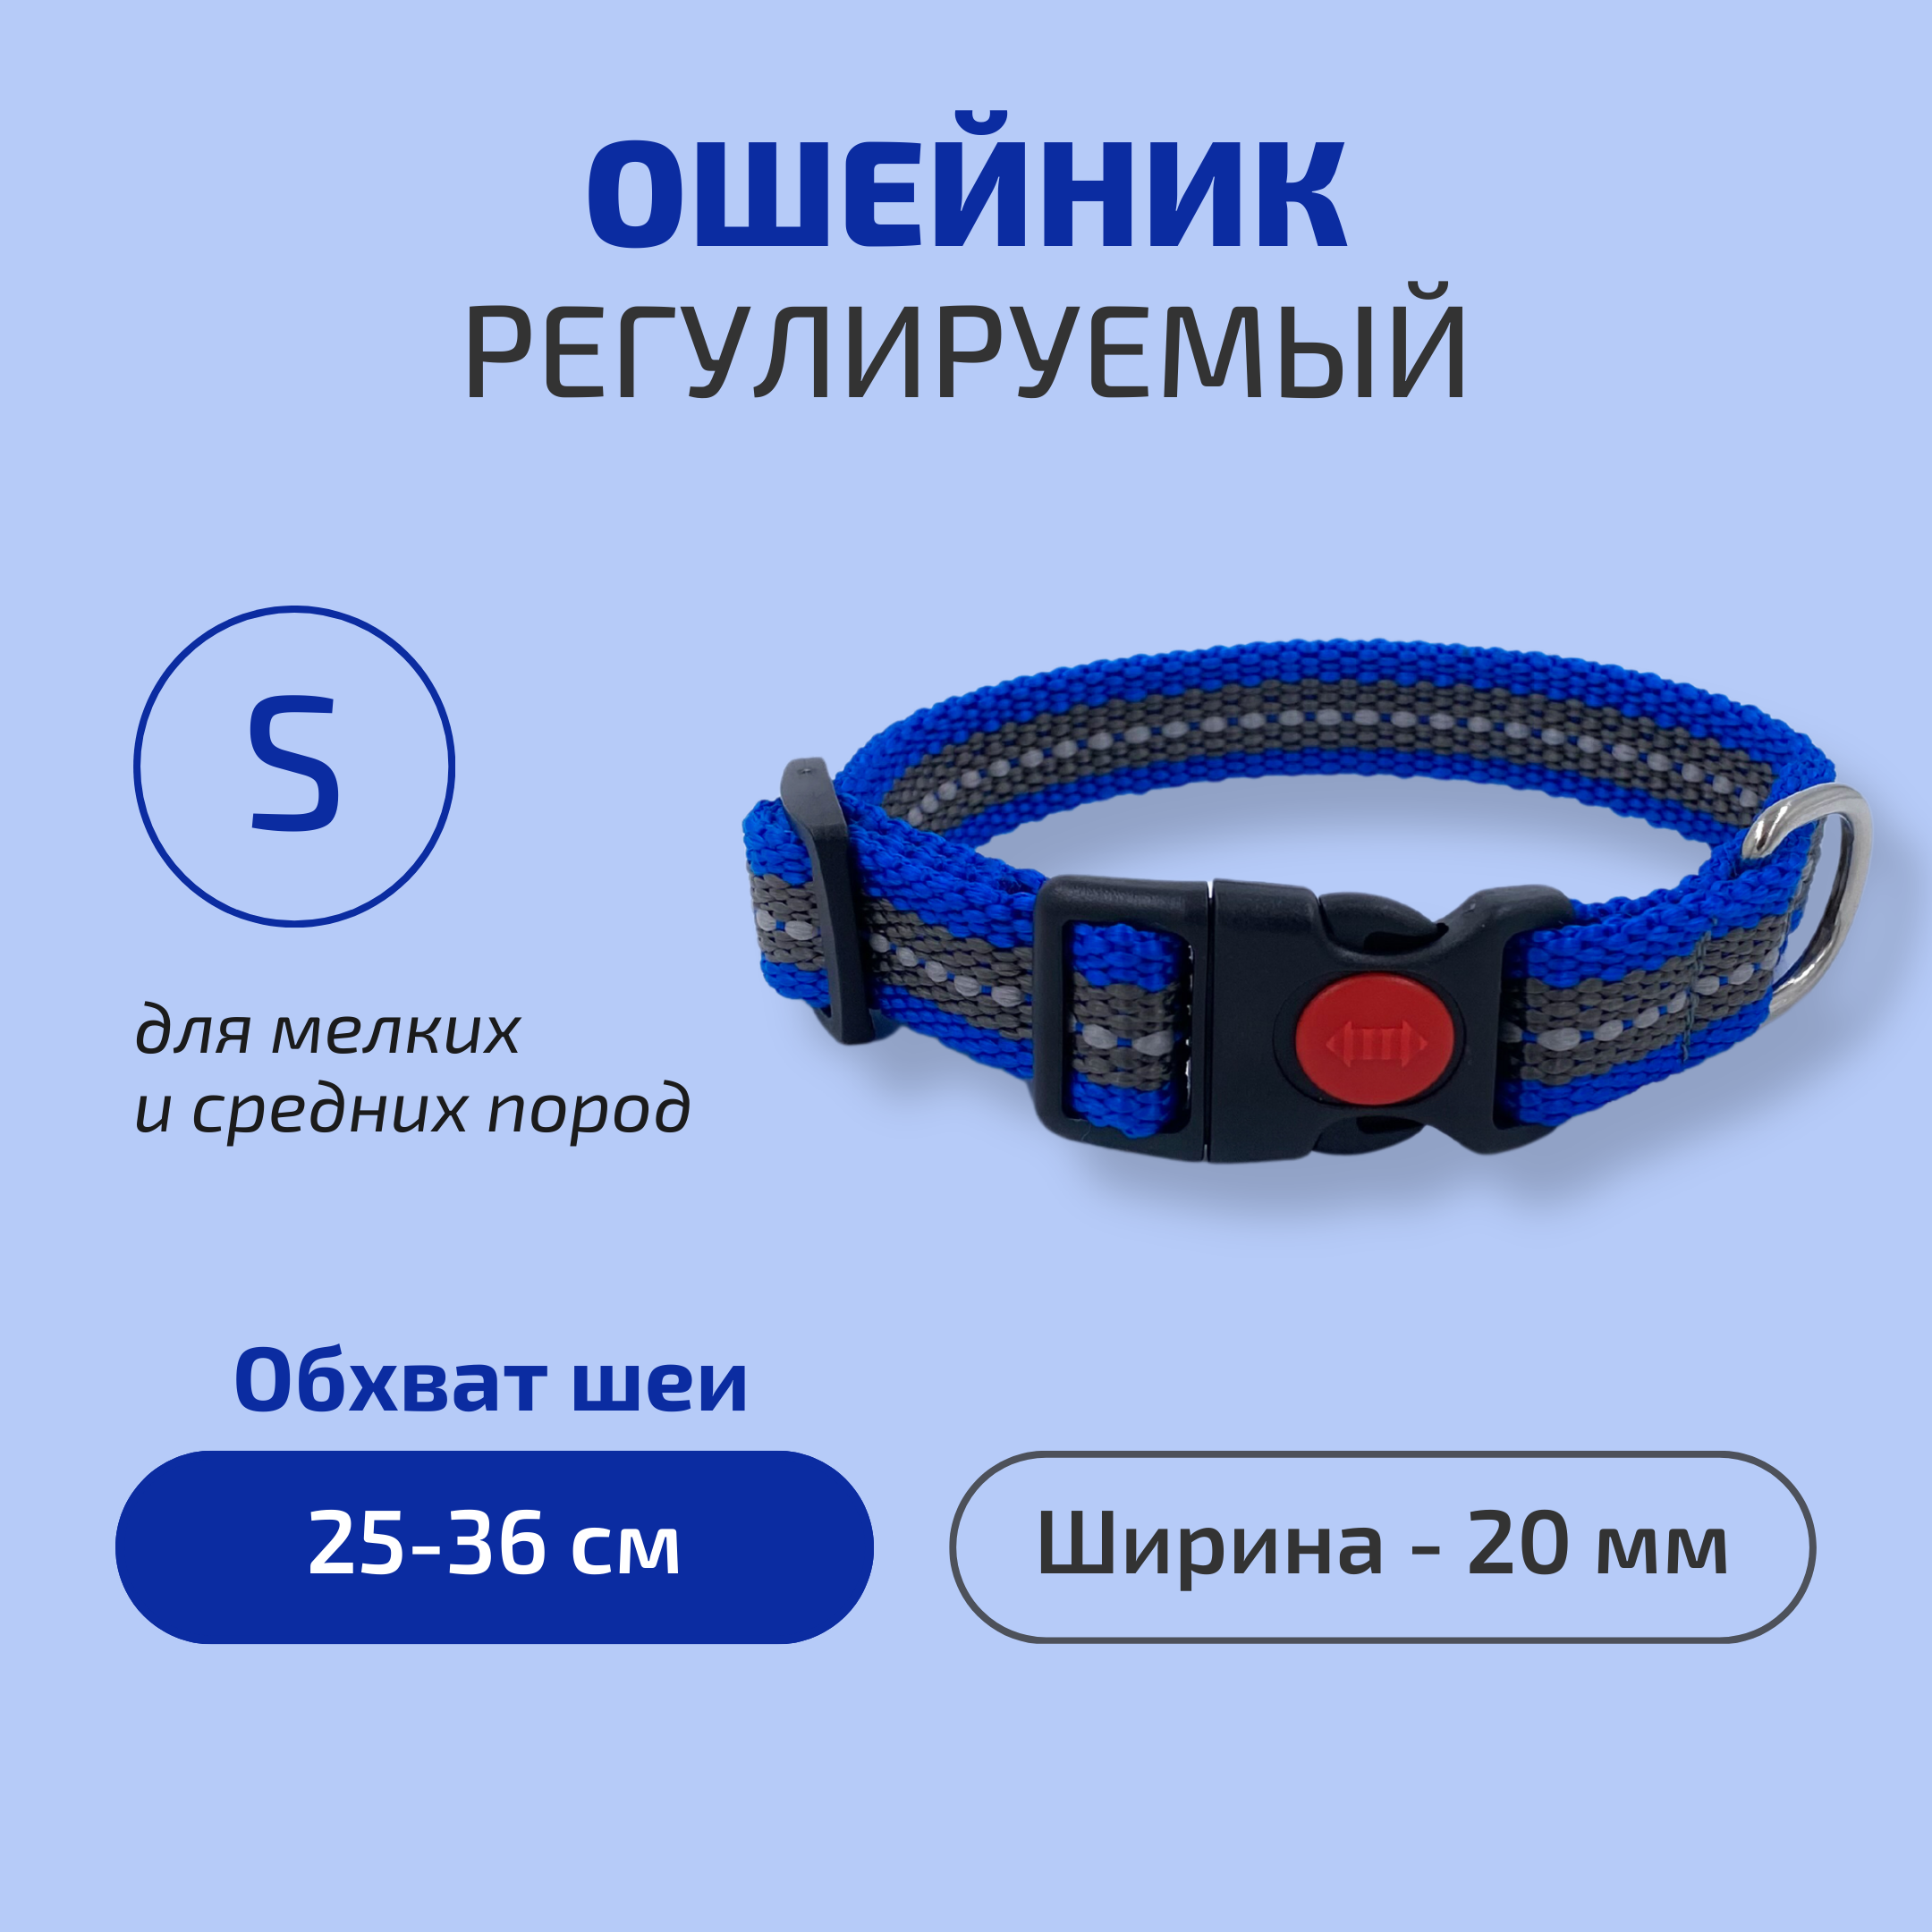 Ошейник для собак Povodki Shop сине-серый, ширина 20 мм, обхват шеи 25-36 см